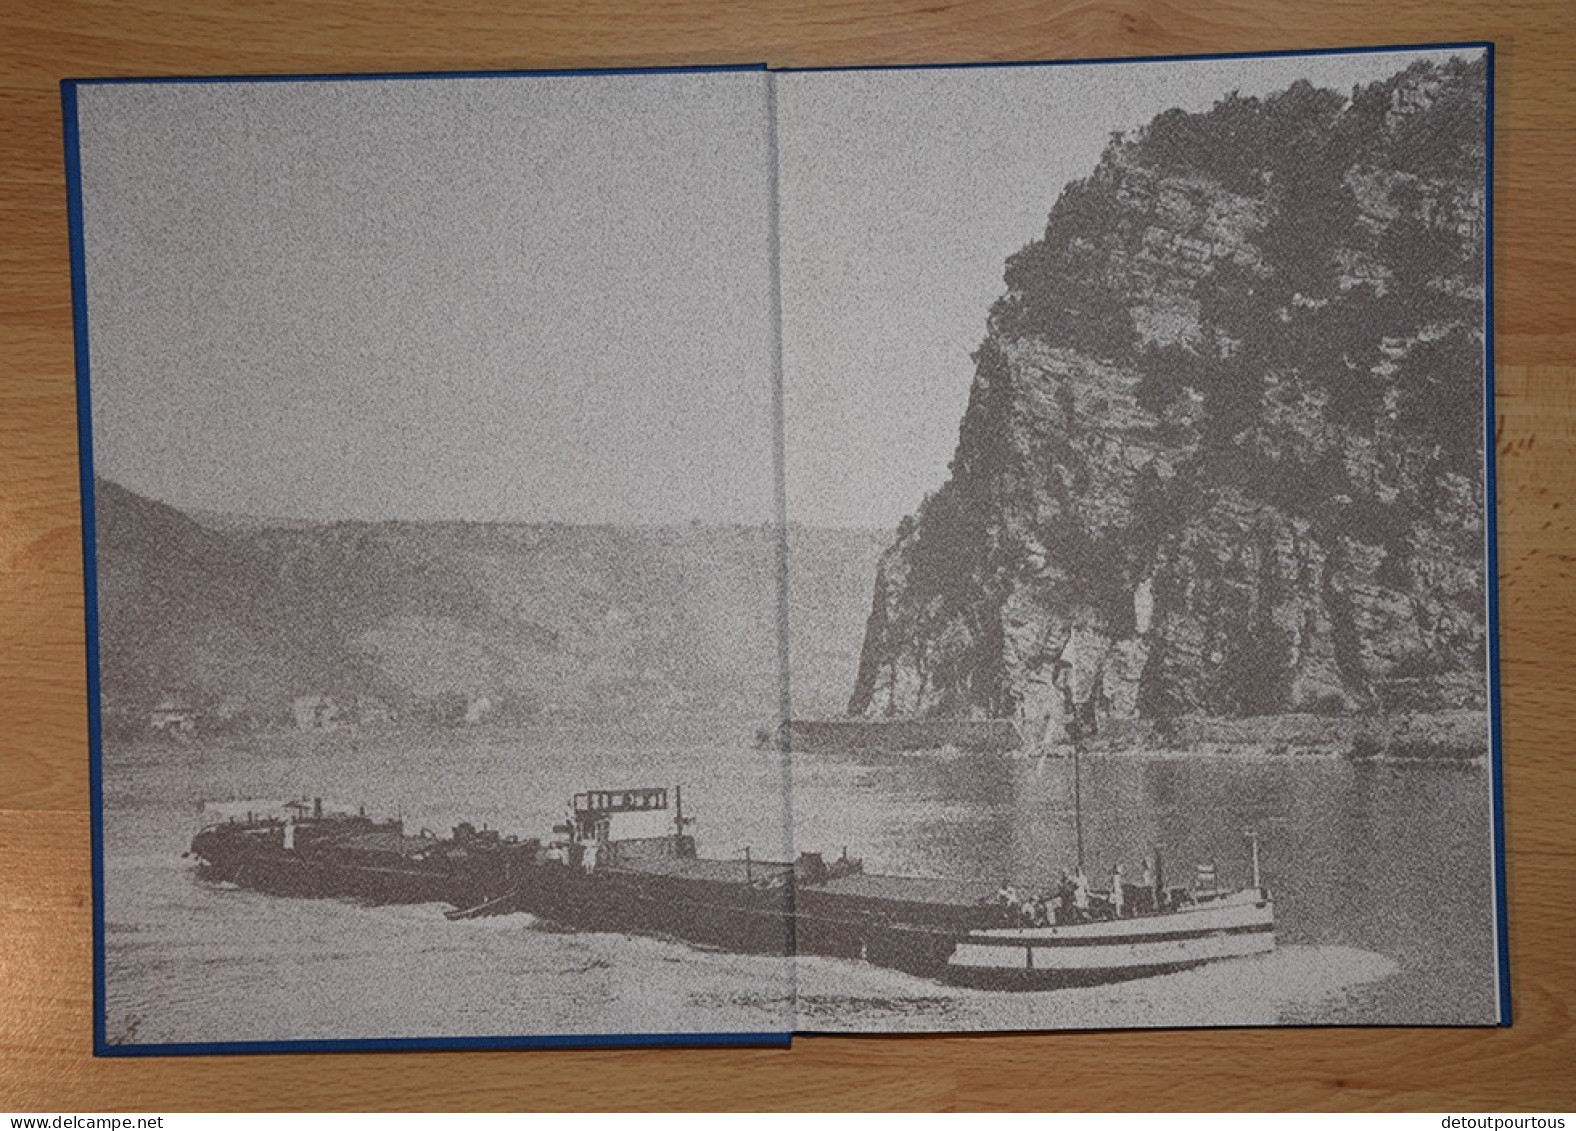 75 JAHRE ROBERT MULLER HAMBURG 1911 1986 Schiffahrt Schiff Gechichte Boat Company History - Transport